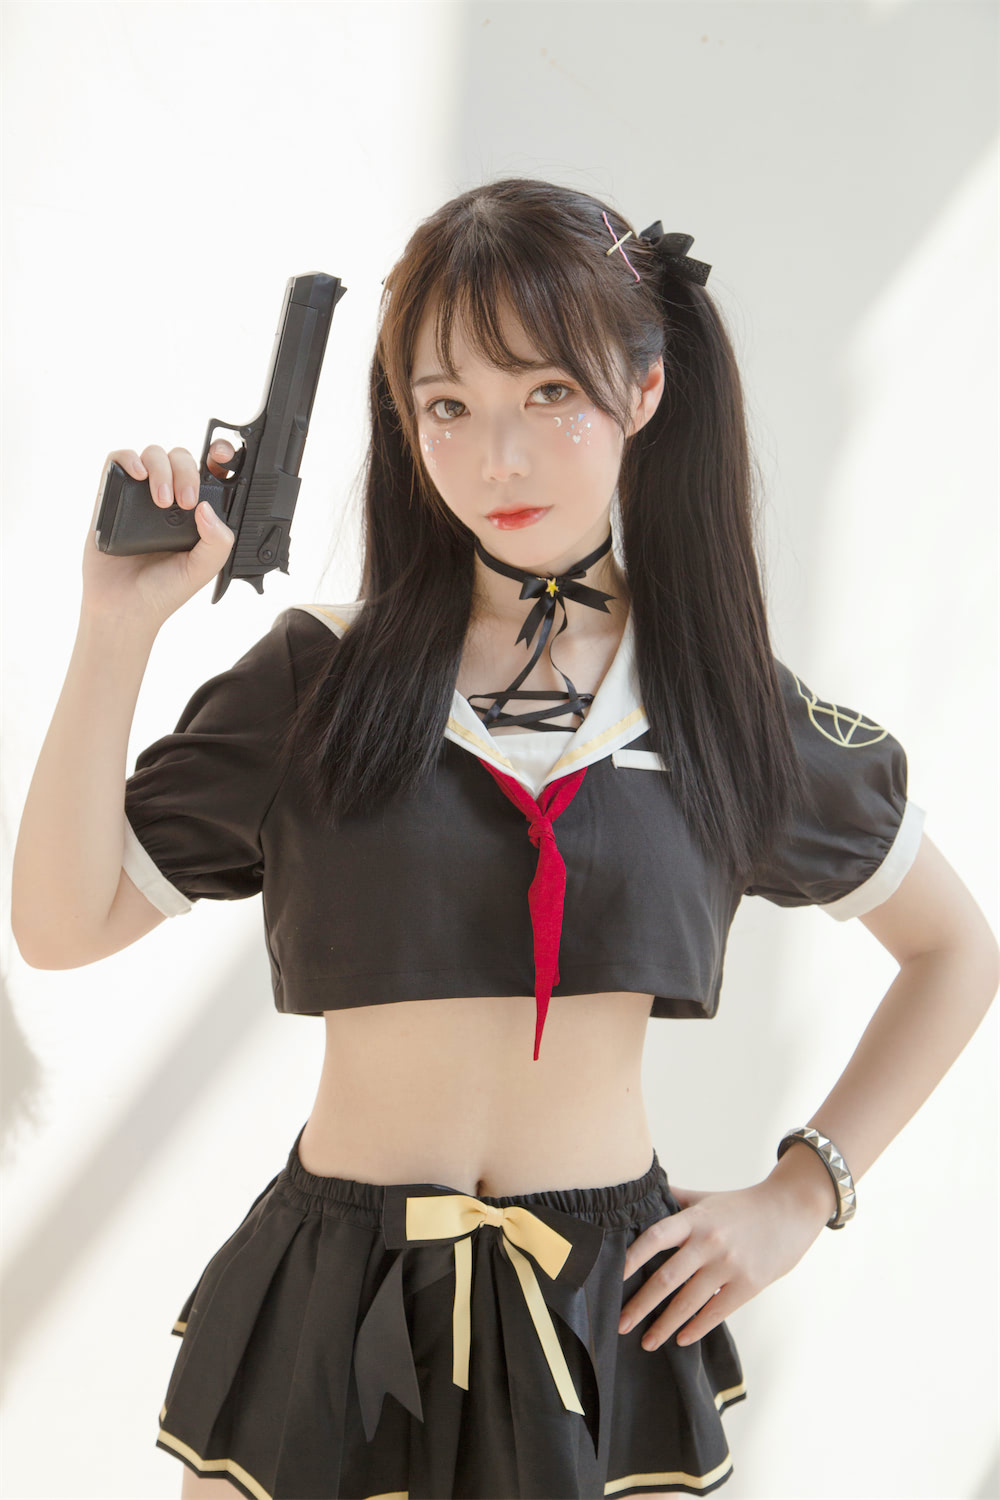 Fushii_海堂禁止GUN少女40p_2